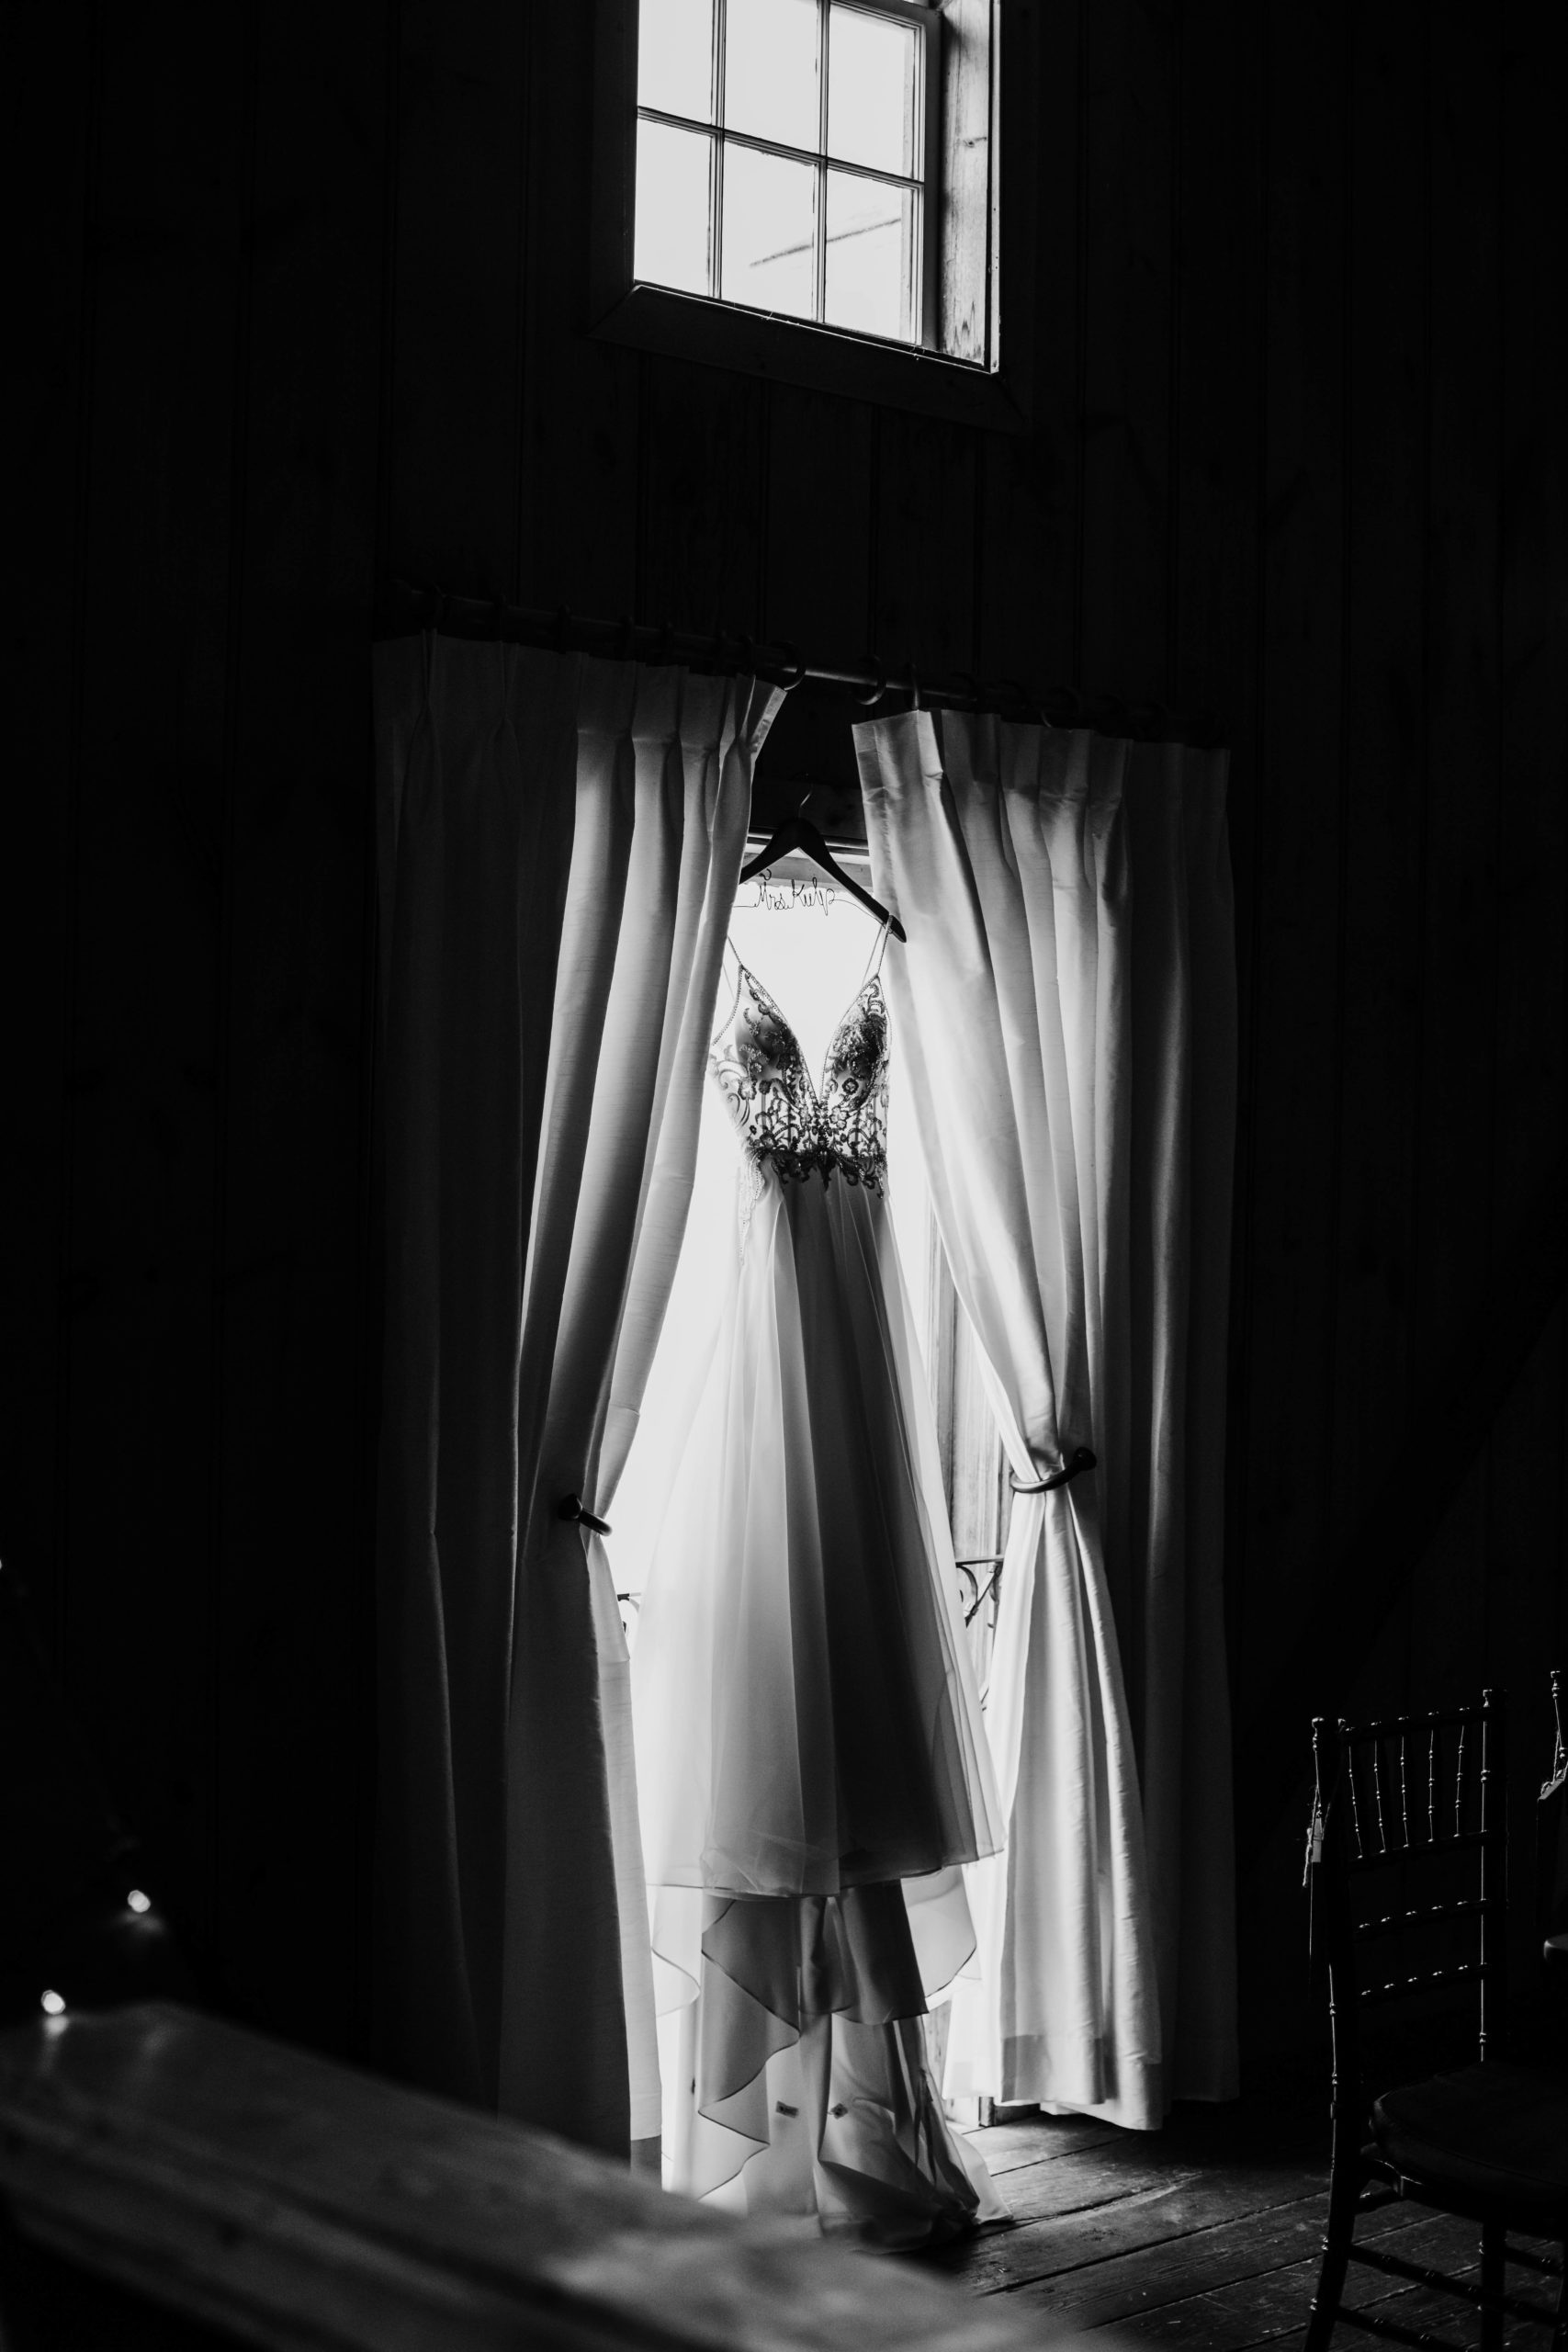 wedding dress handing in a tall window